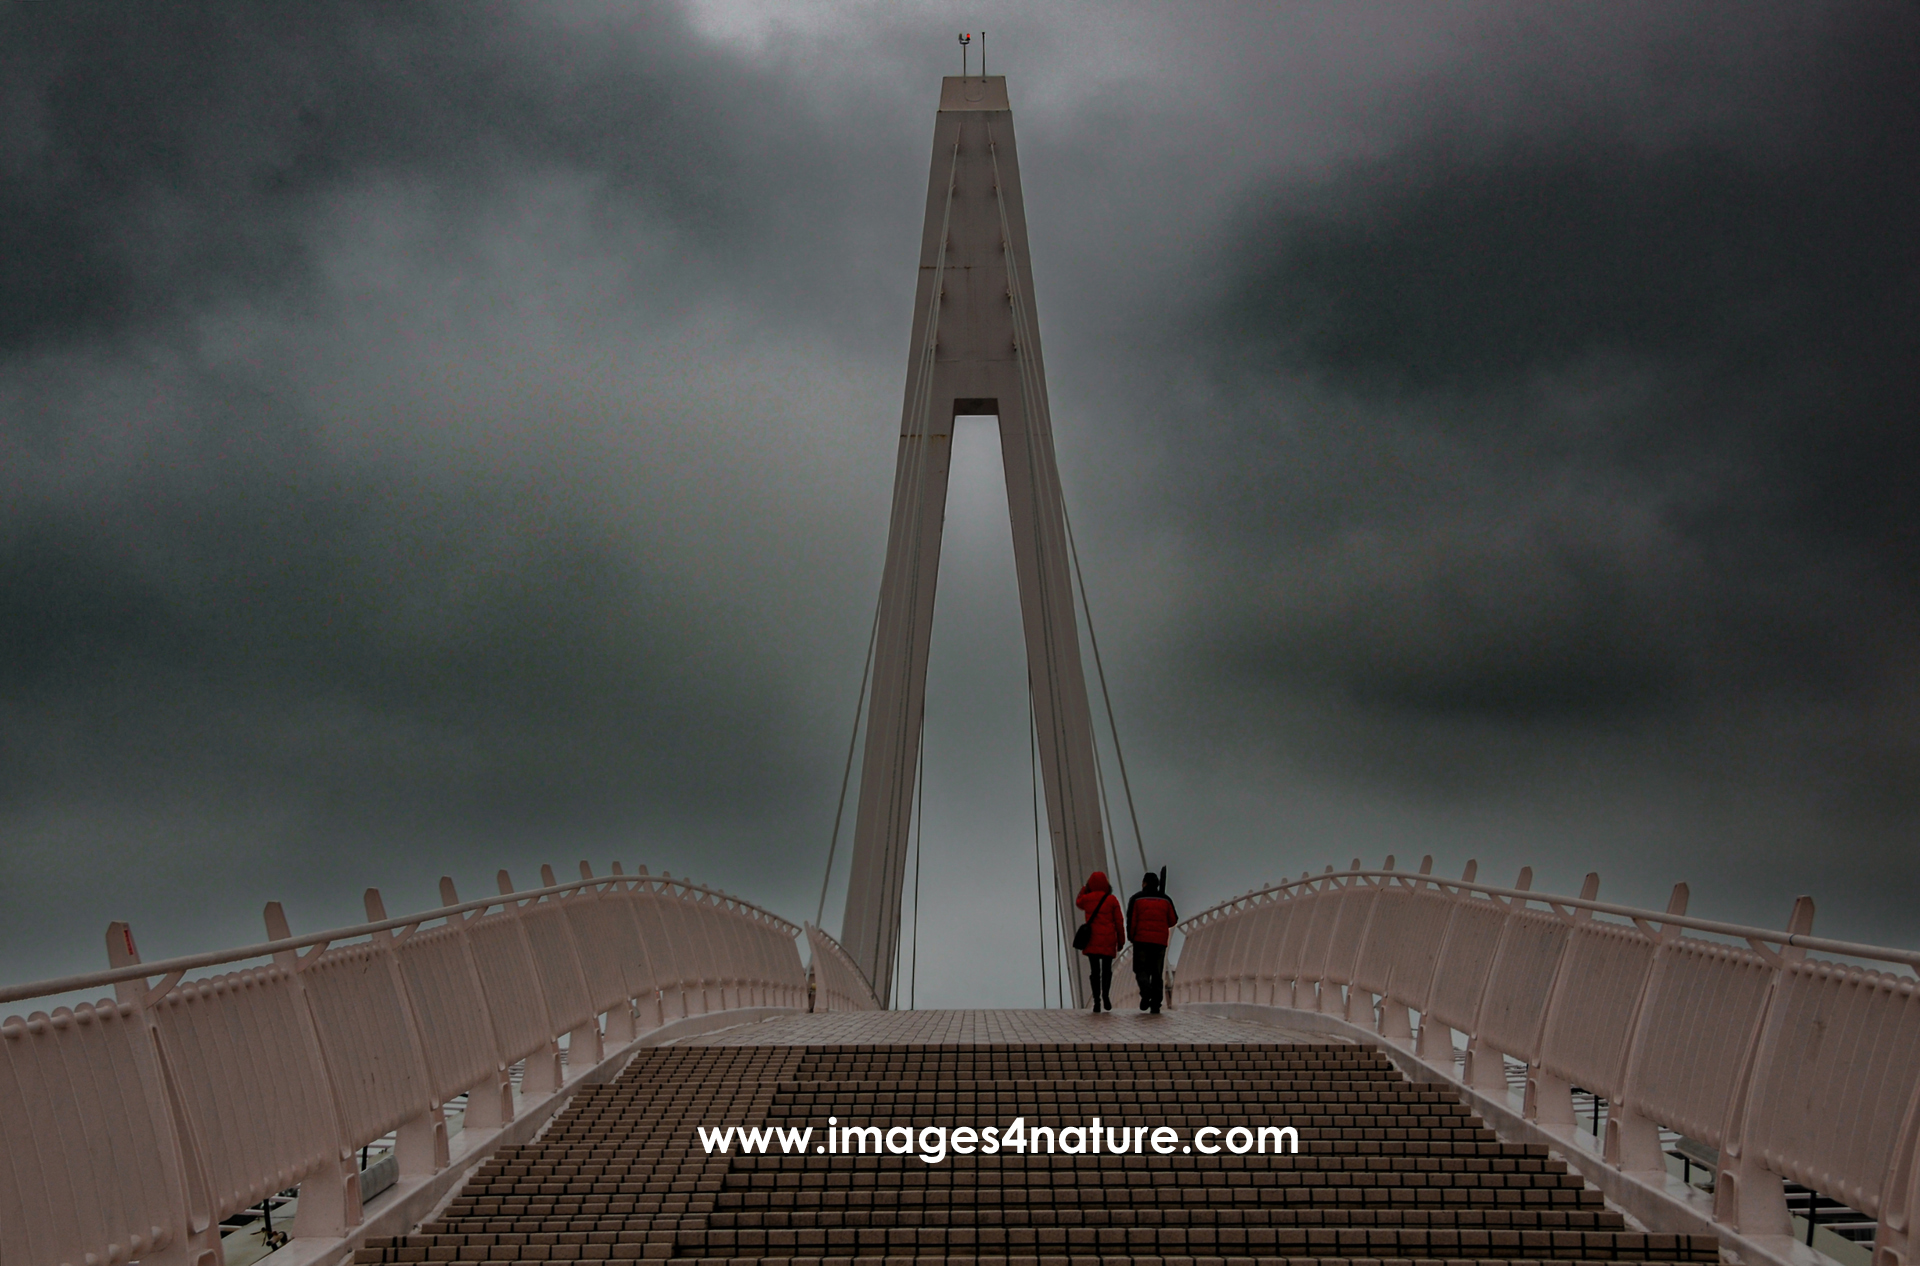 Couple with red rain jackets walking across Lovers Bridge